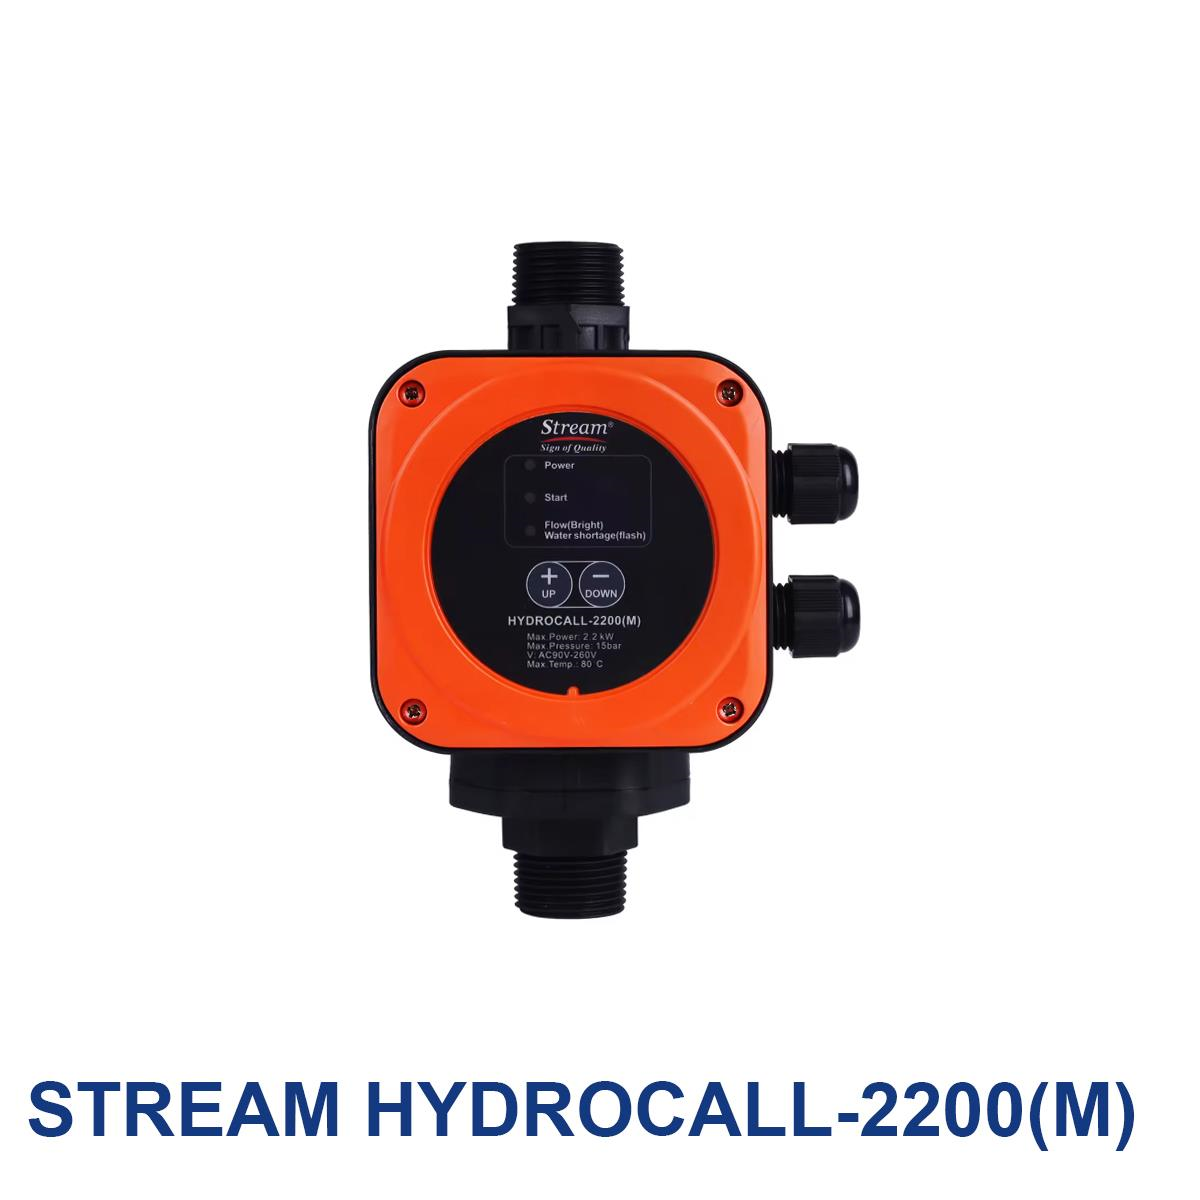 STREAM-HYDROCALL-2200(M)